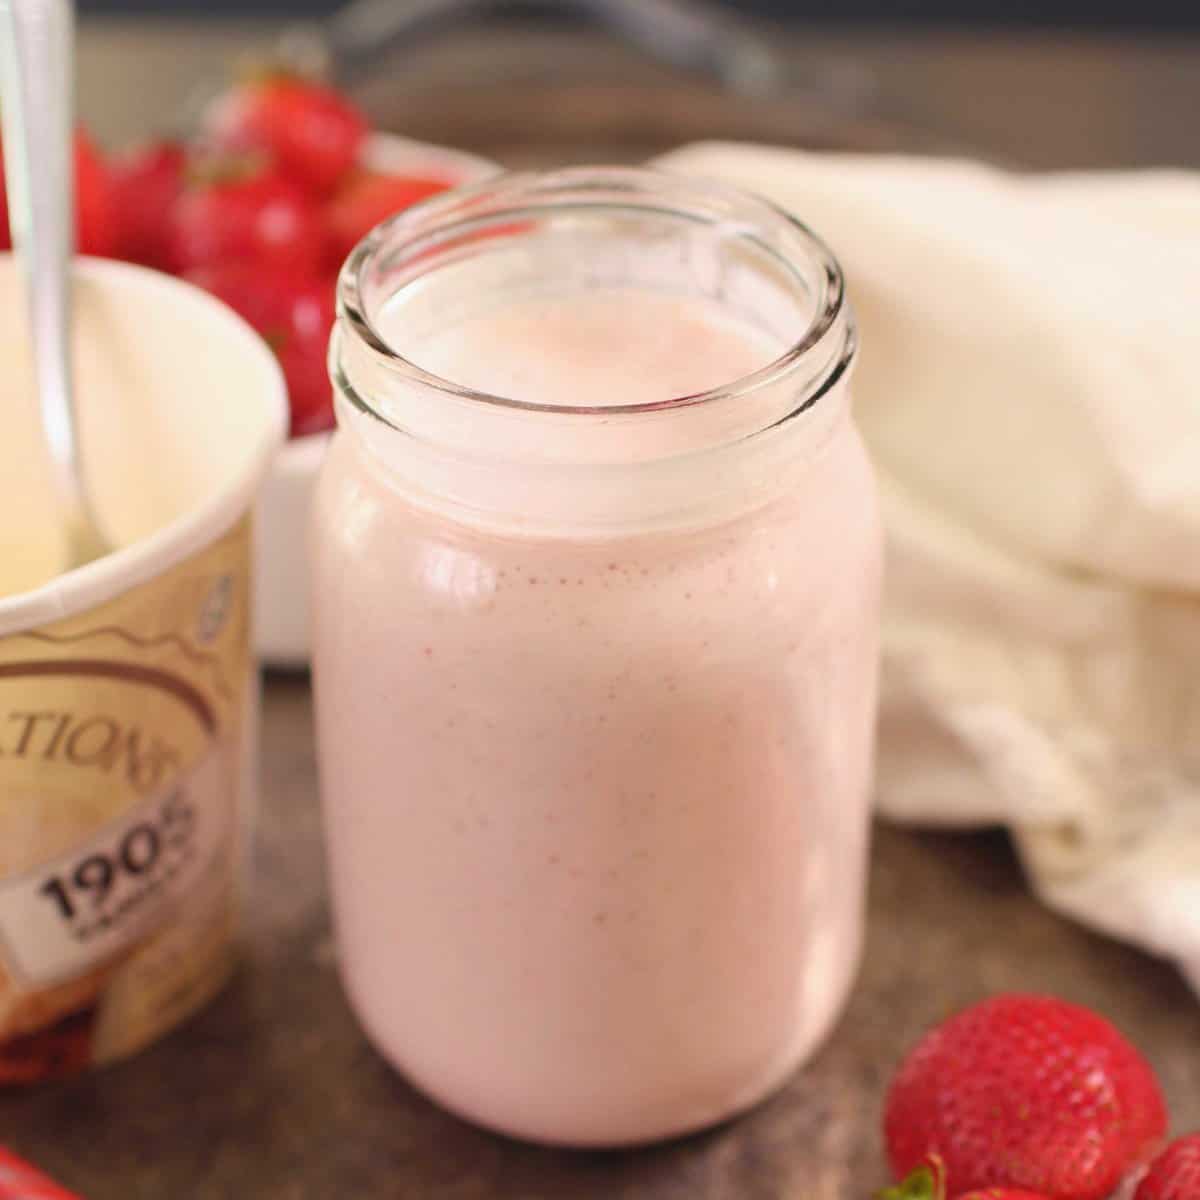 https://onedishkitchen.com/wp-content/uploads/2020/07/strawberry-milkshake-one-dish-kitchen-process-3-scaled.jpg